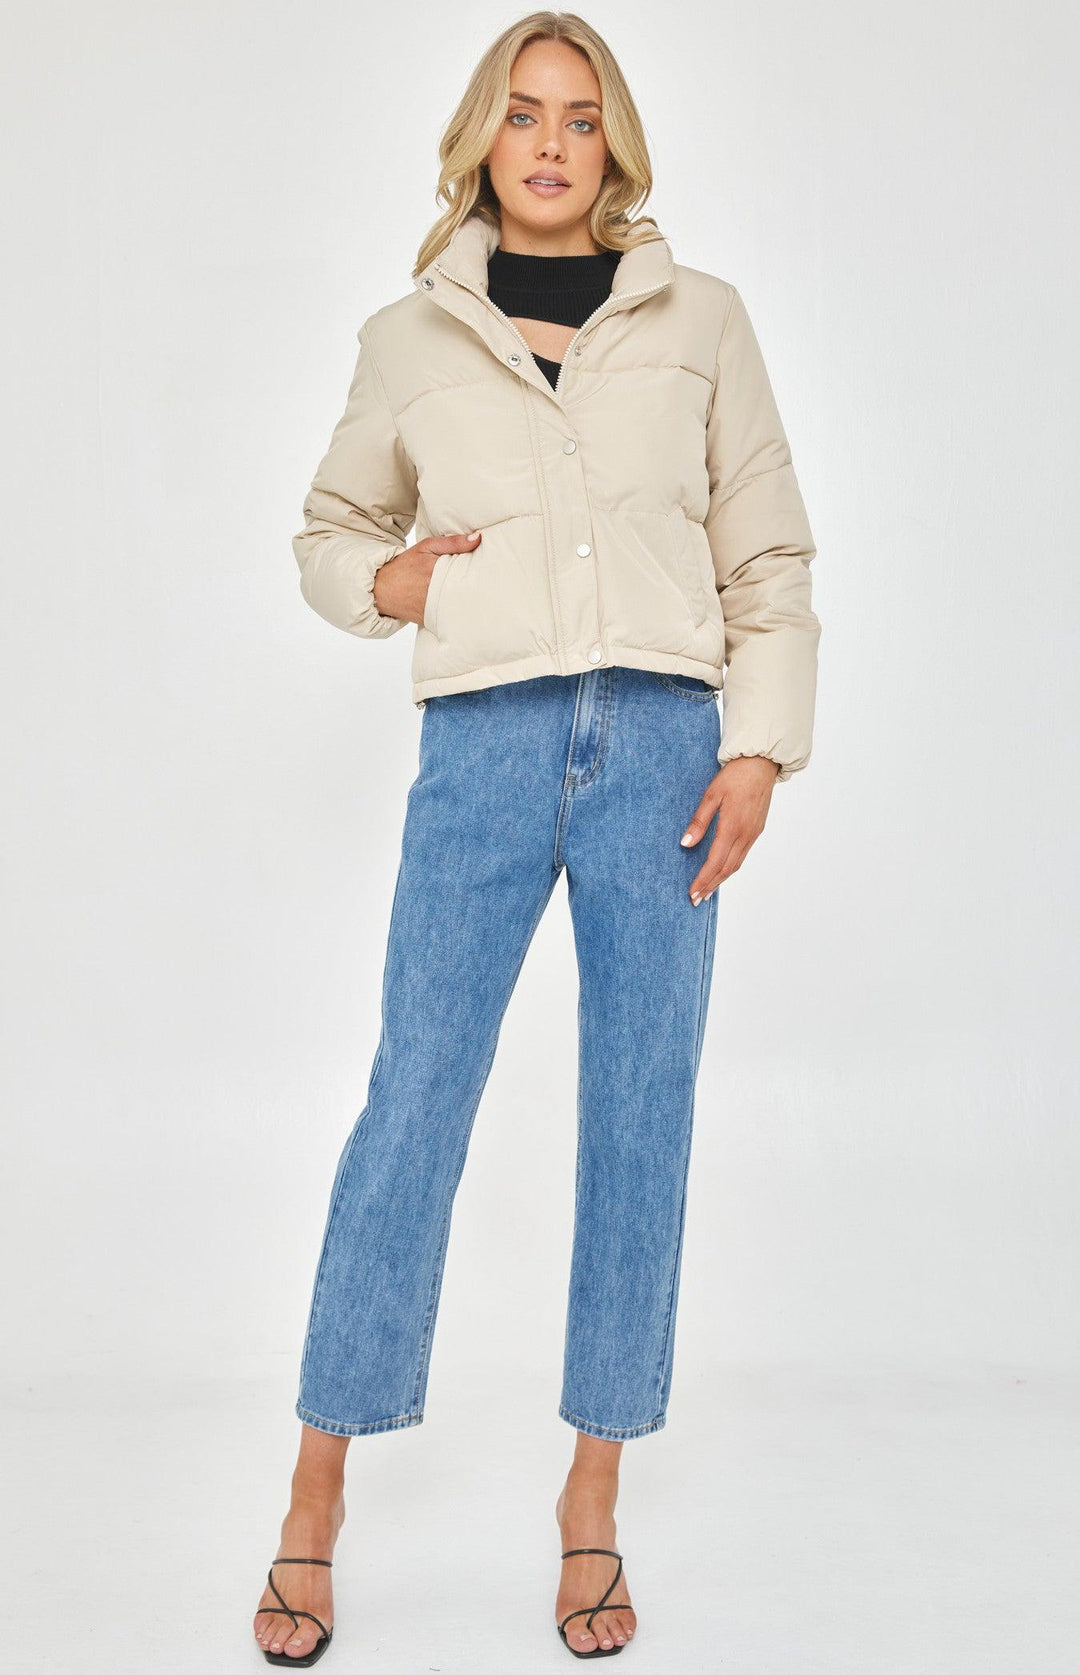 Higher Love Puffer Jacket - Cream/Beige Outerwear